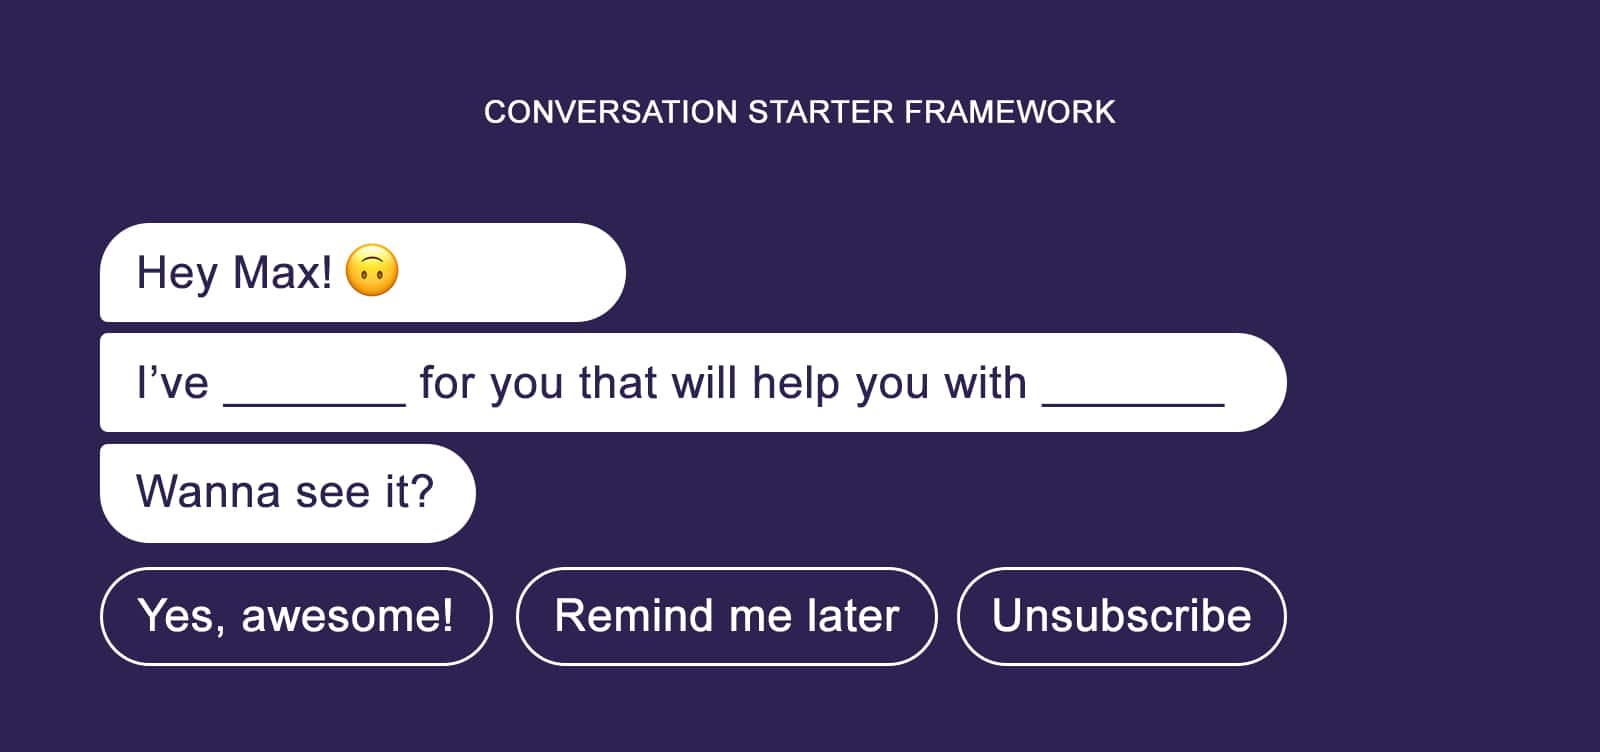 Conversation starter framework